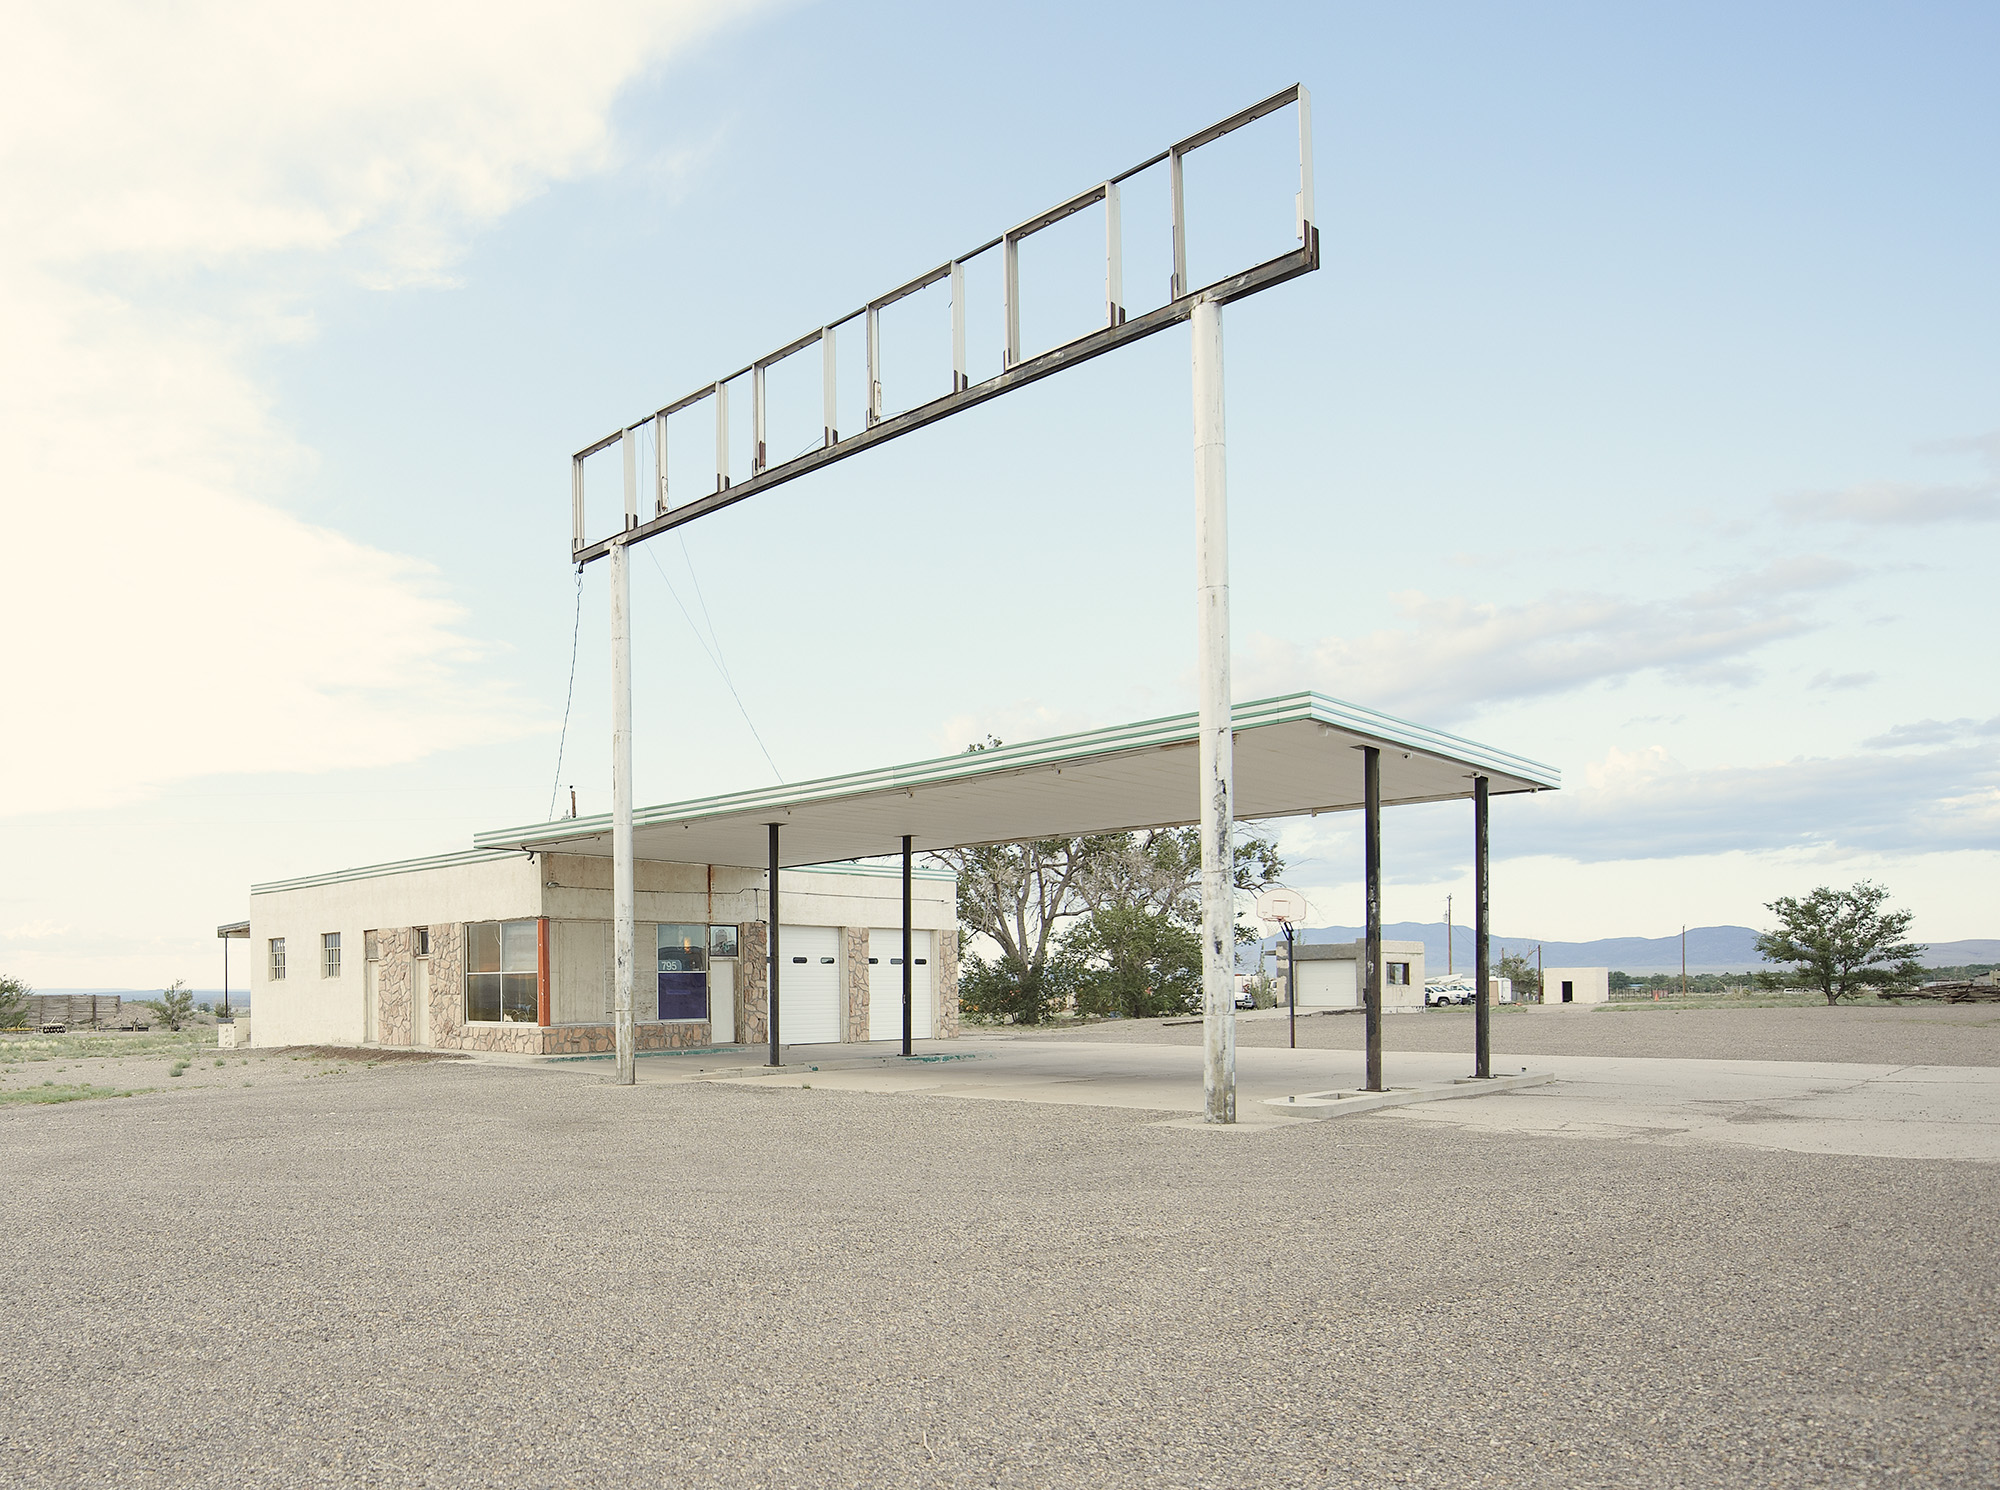 Twentysix (Abandoned) Gasoline Stations (2012) - Iñaki Bergera